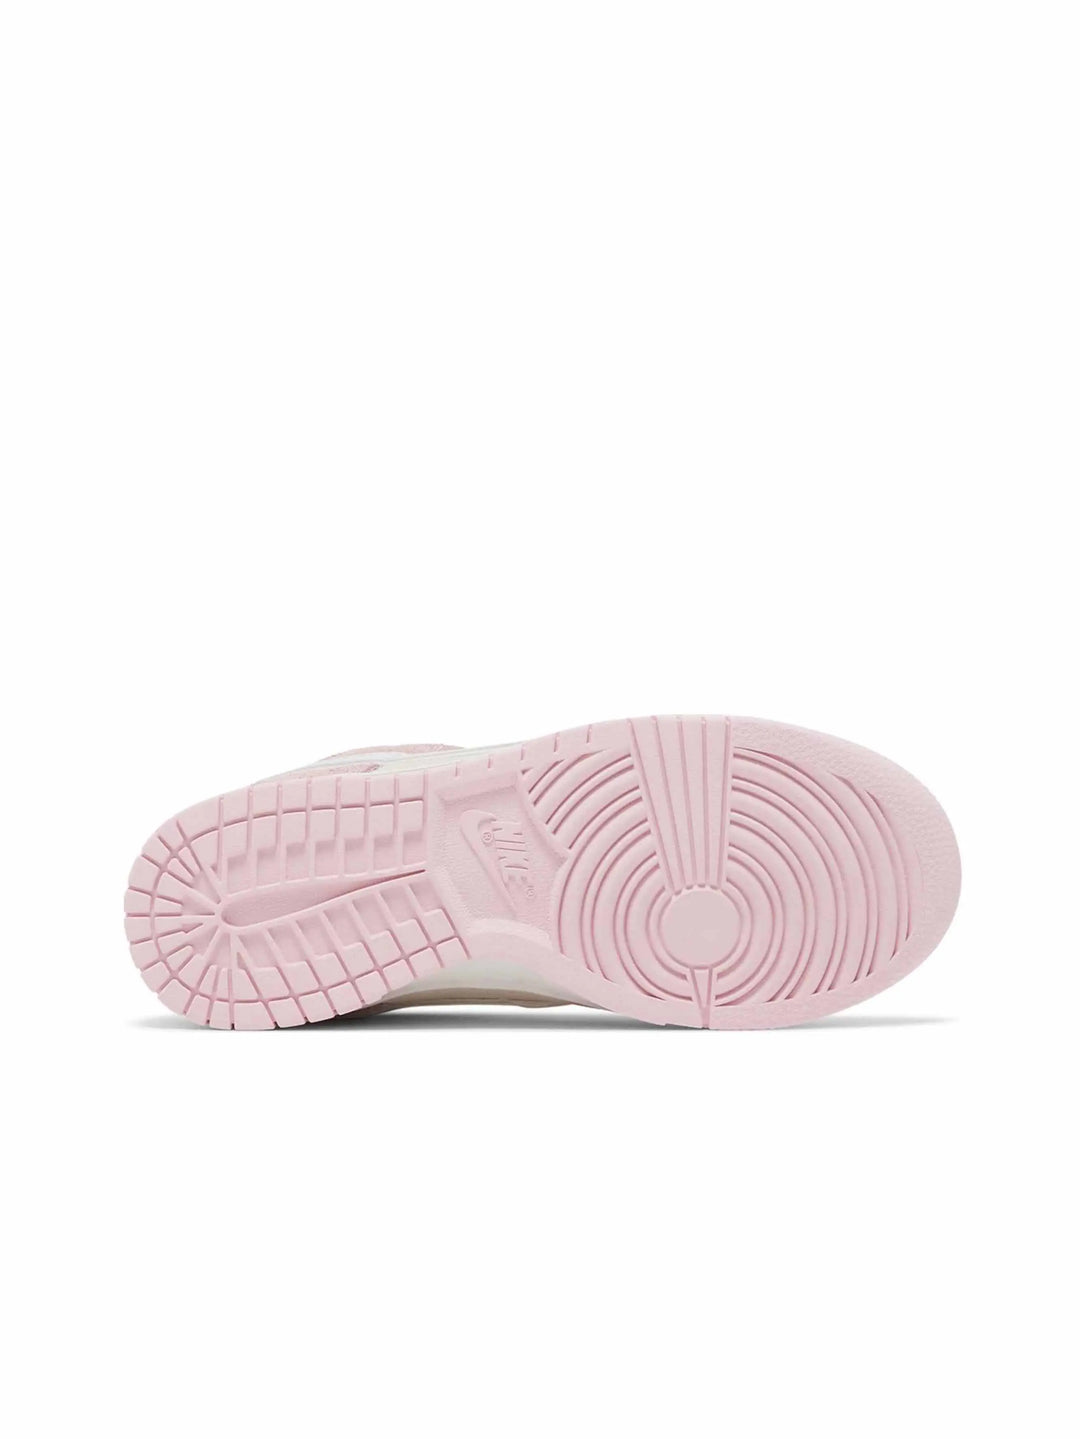 Nike Dunk Low LX Pink Foam (W) - Prior